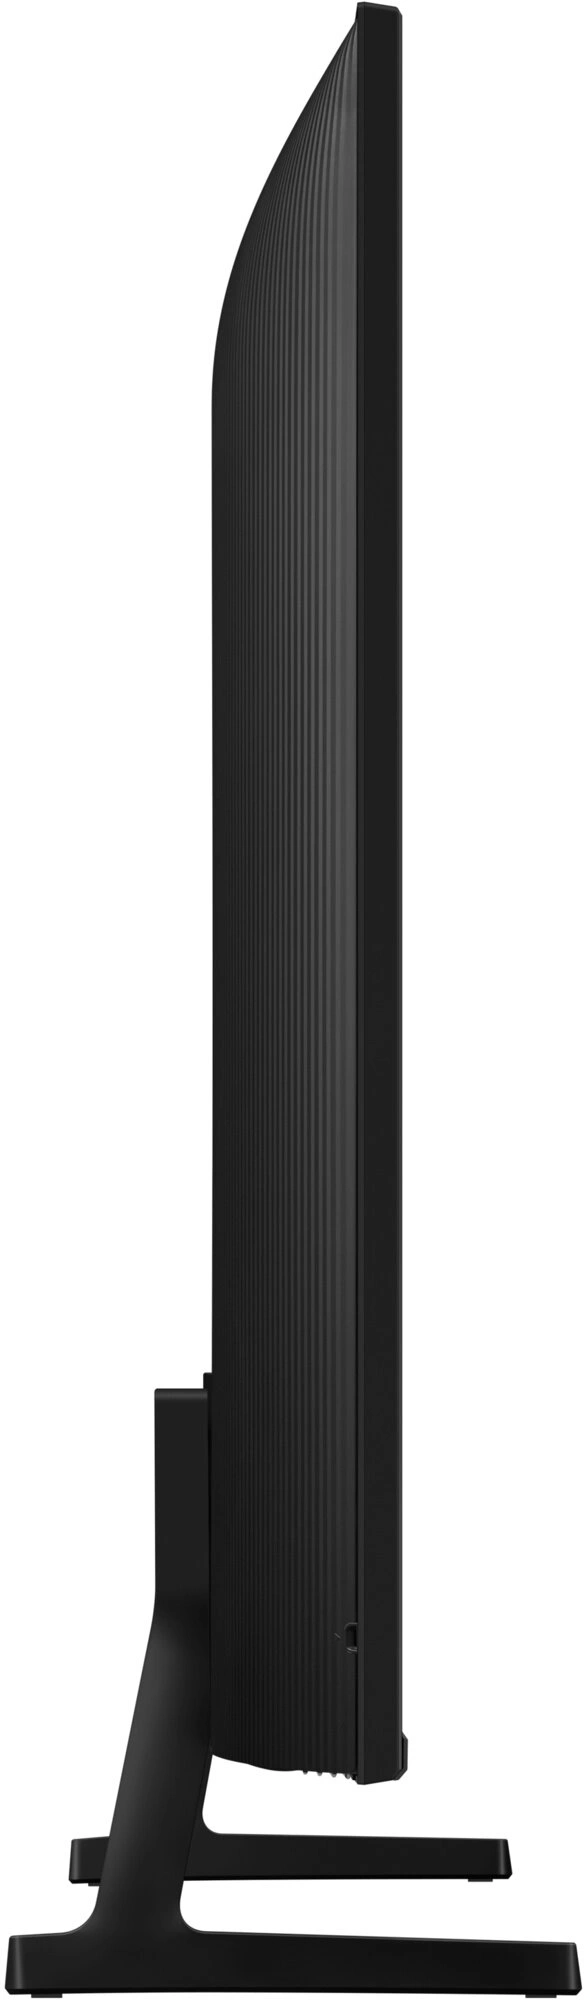 Samsung UE55DU7172 - 138cm